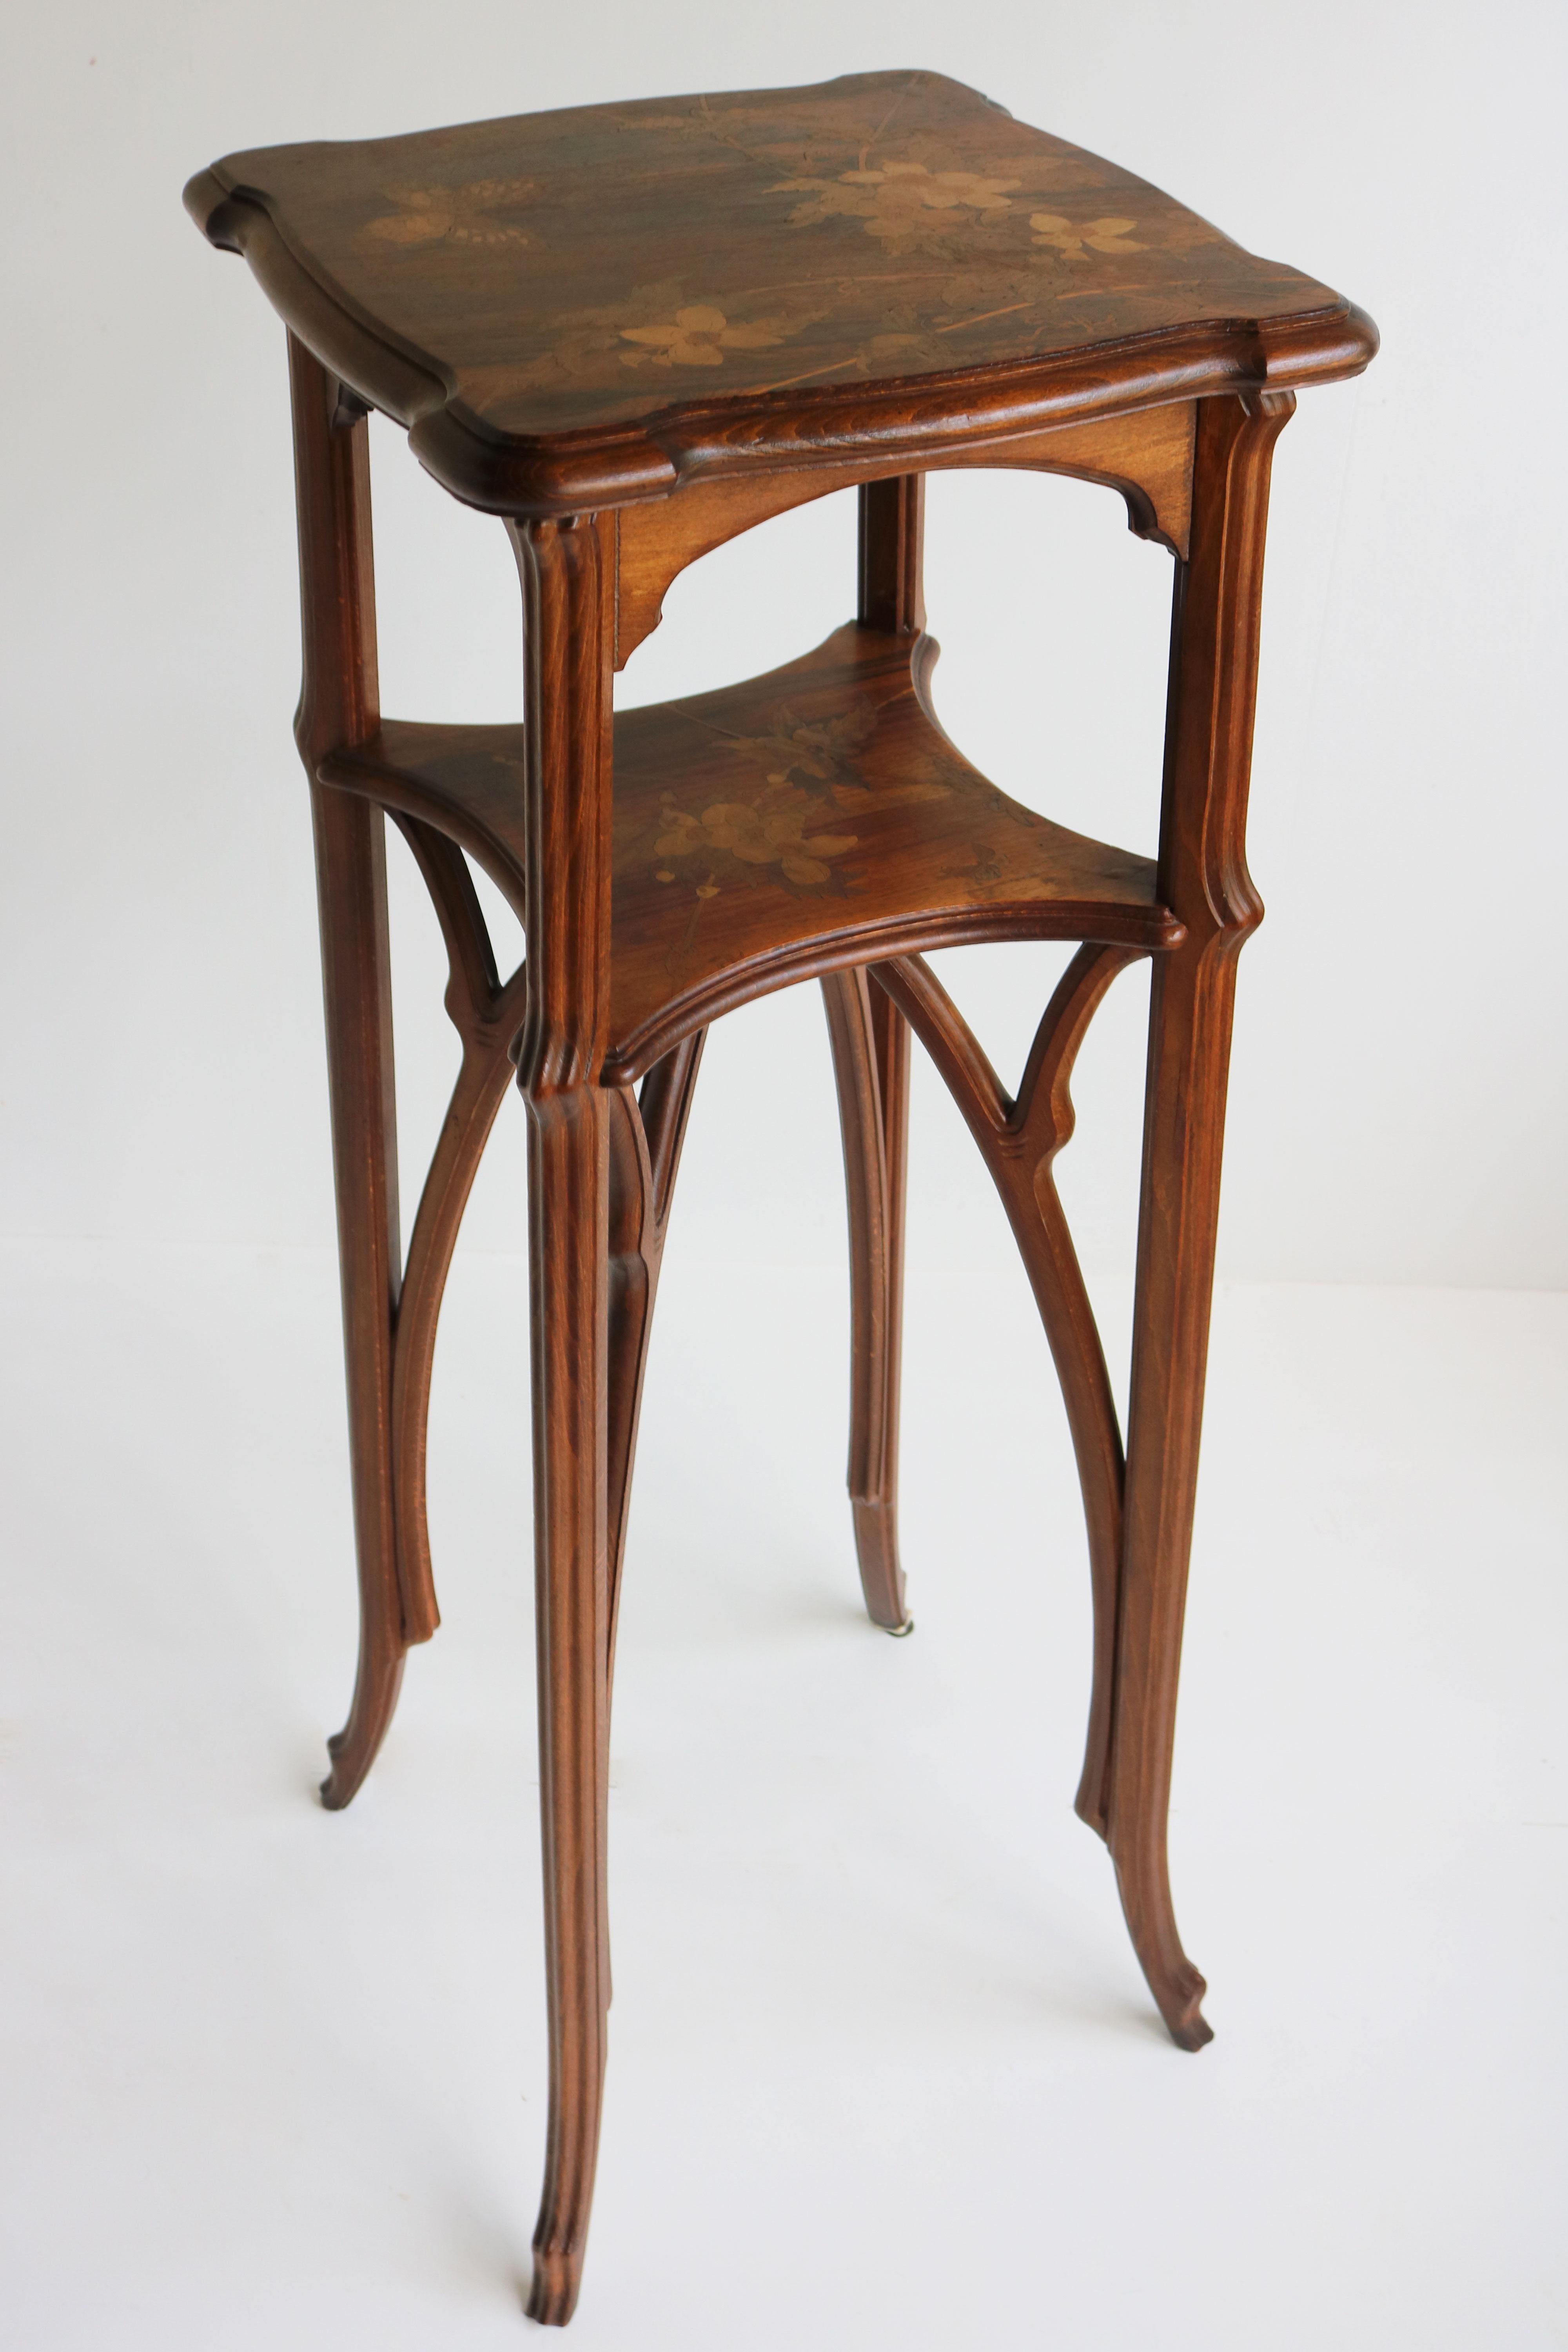 Original Art Nouveau Pedestal by Emile Galle 1890 French Antique Inlaid Table For Sale 9